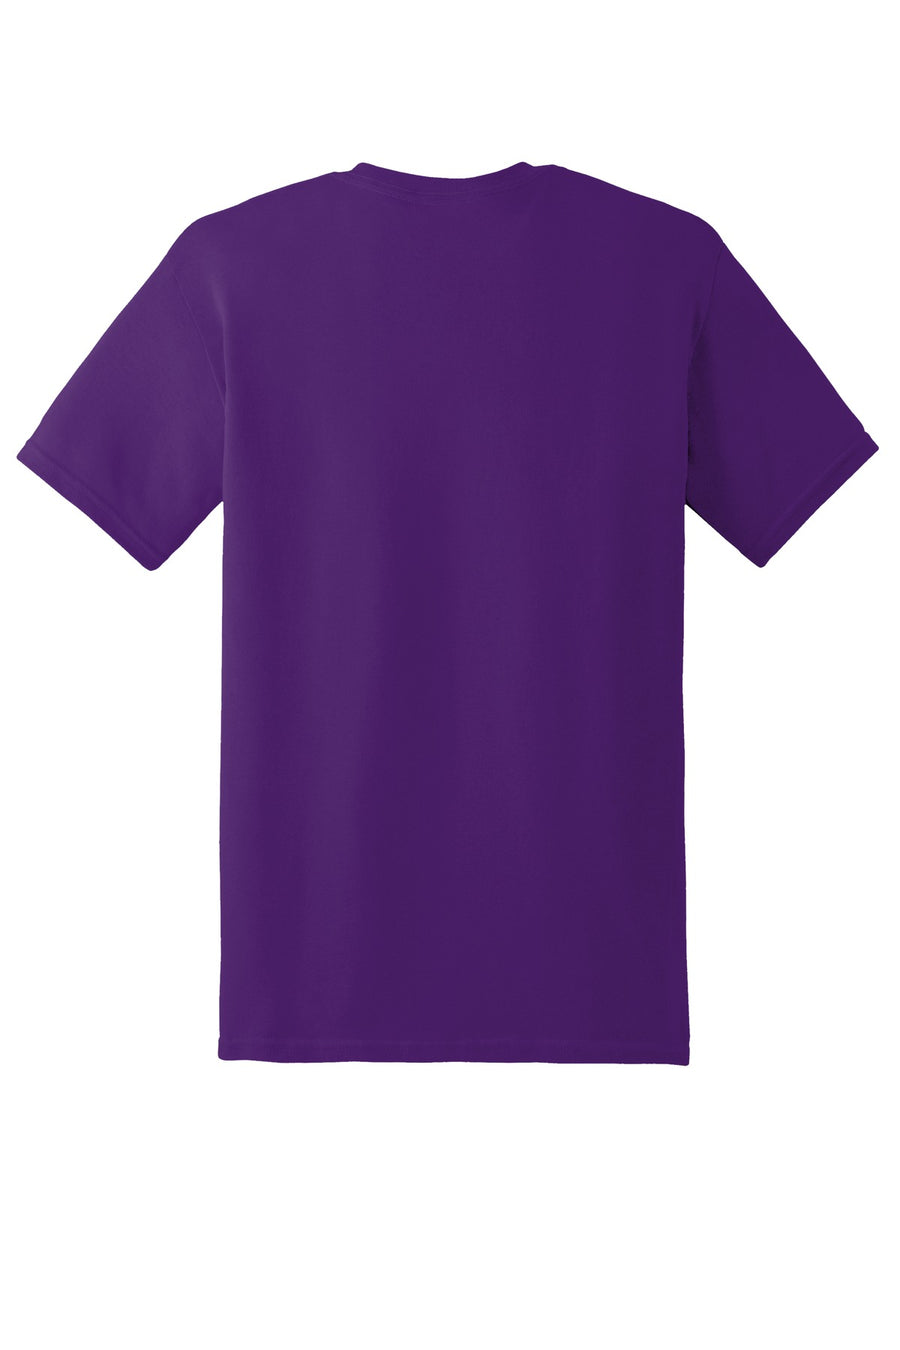 5000-Purple-back_flat